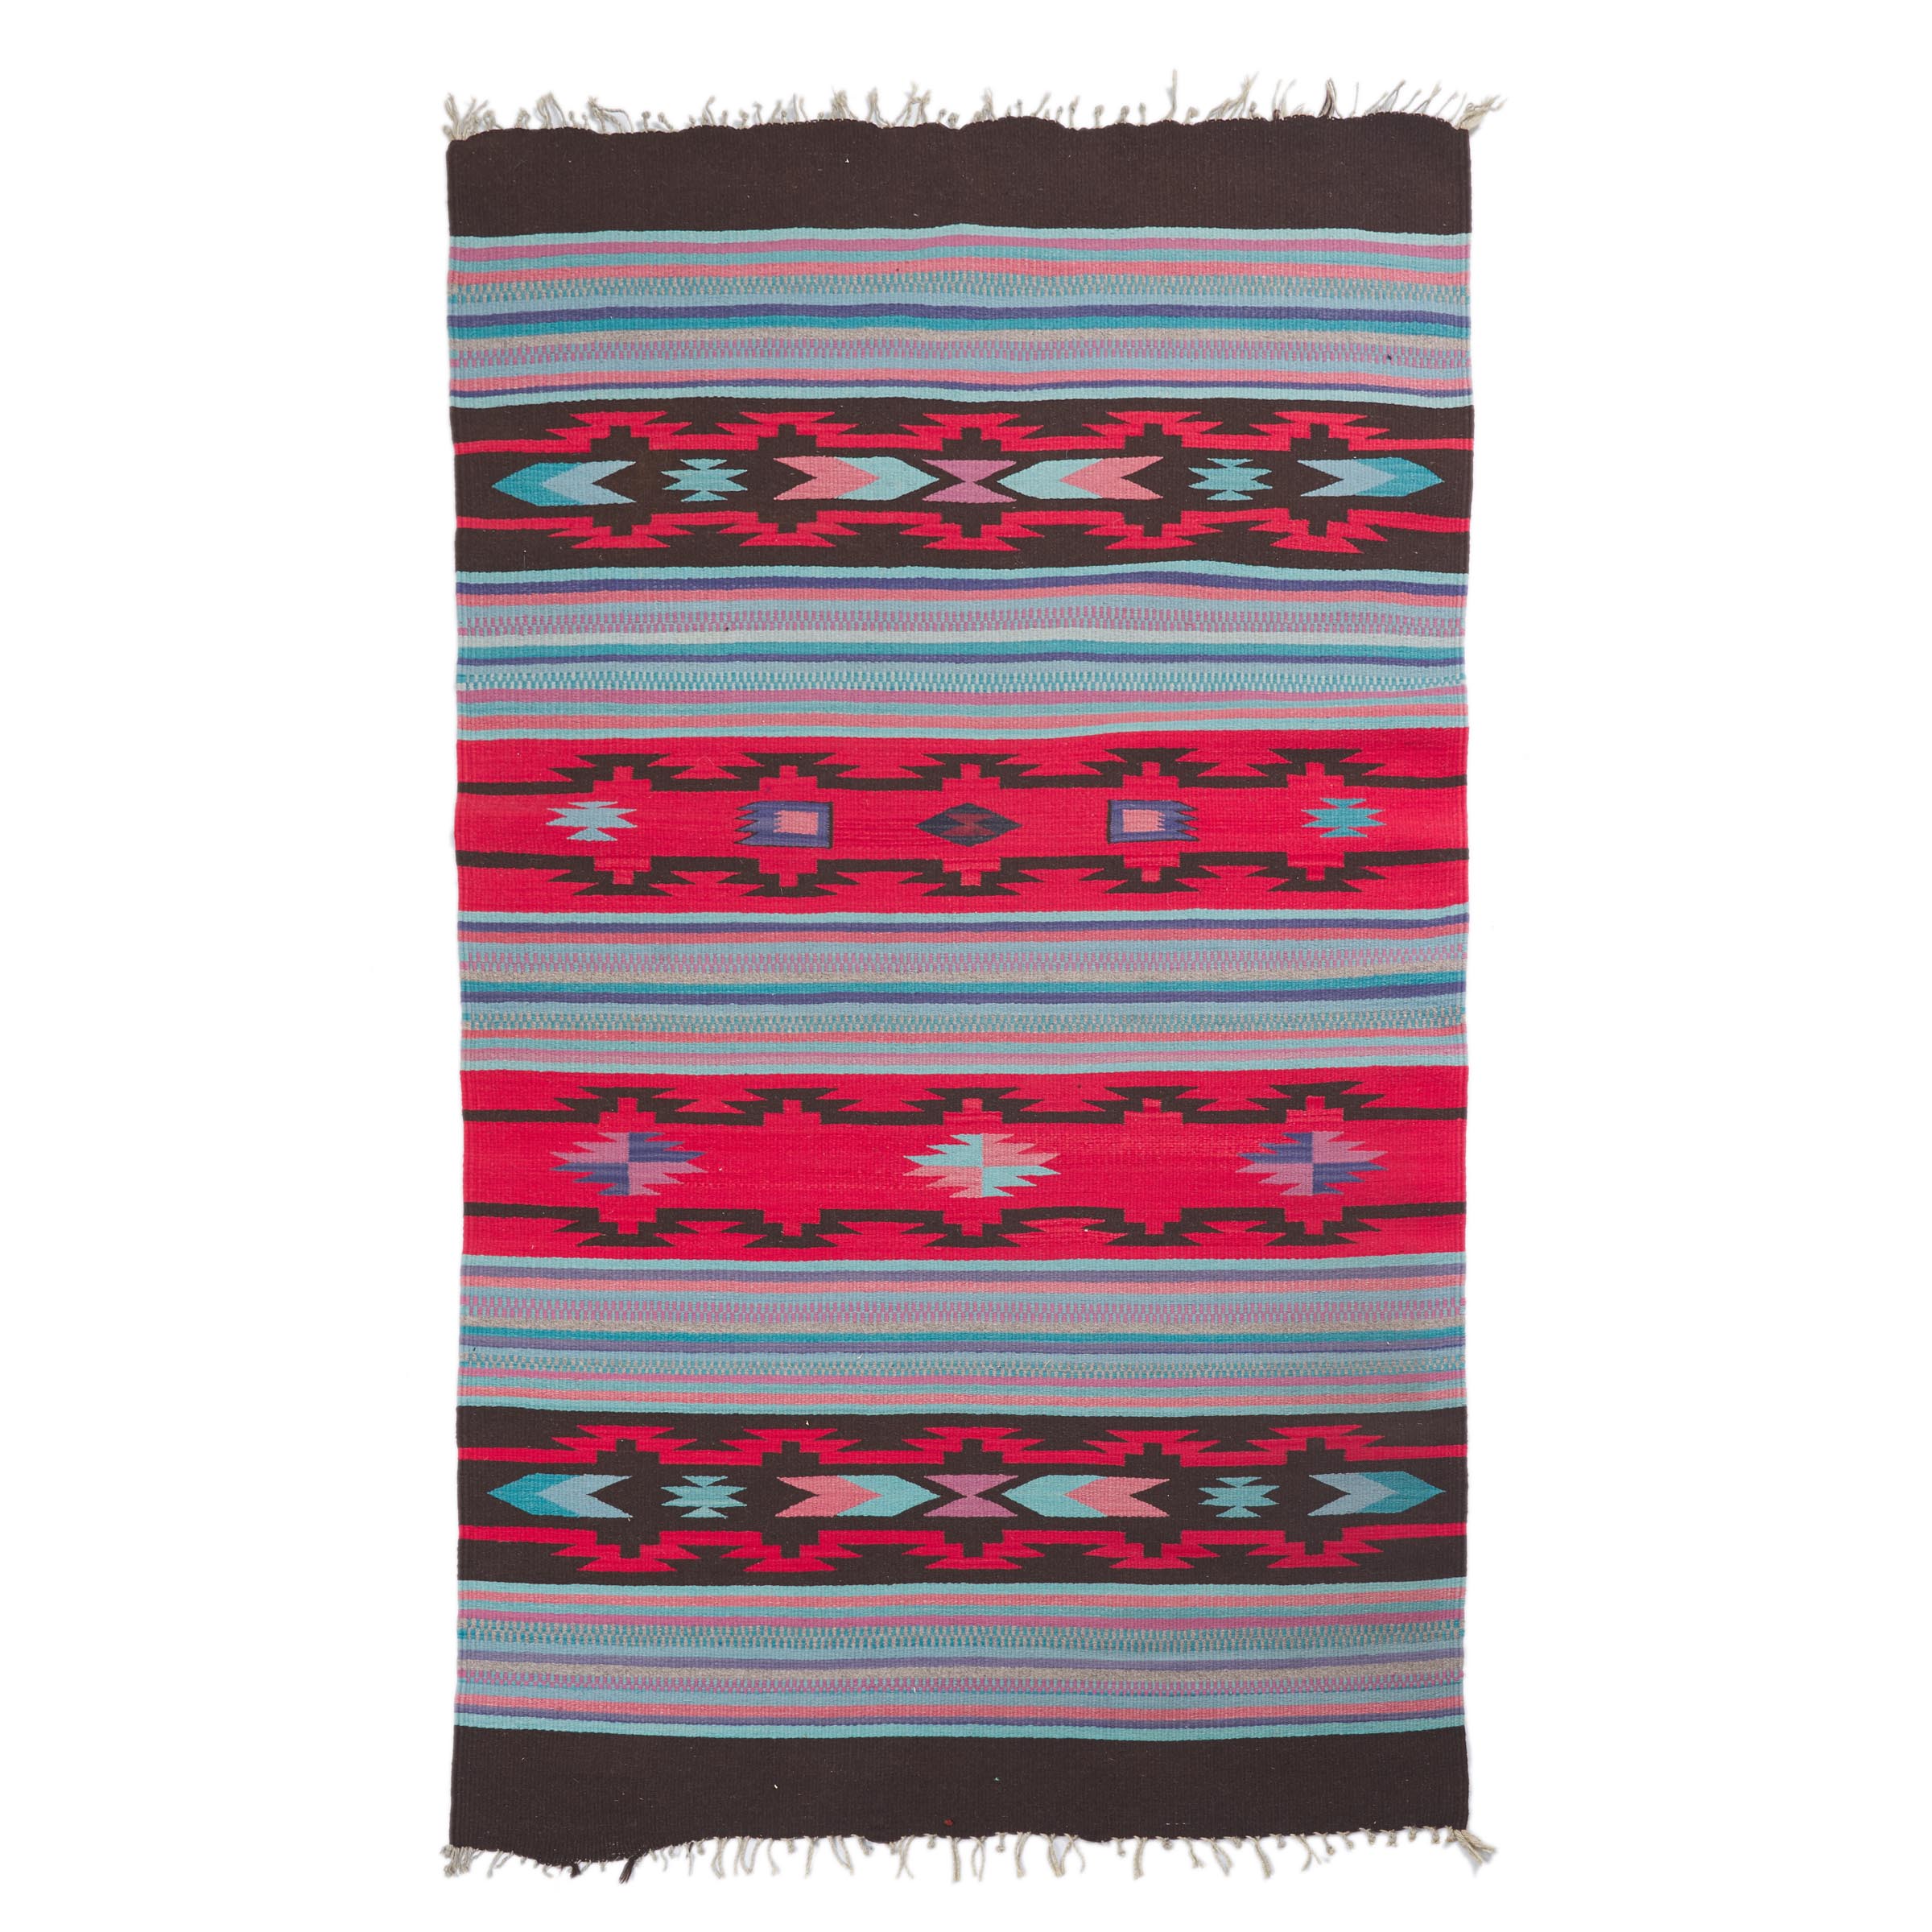 Navajo Blanket, New Mexico, USA, c.1960/70